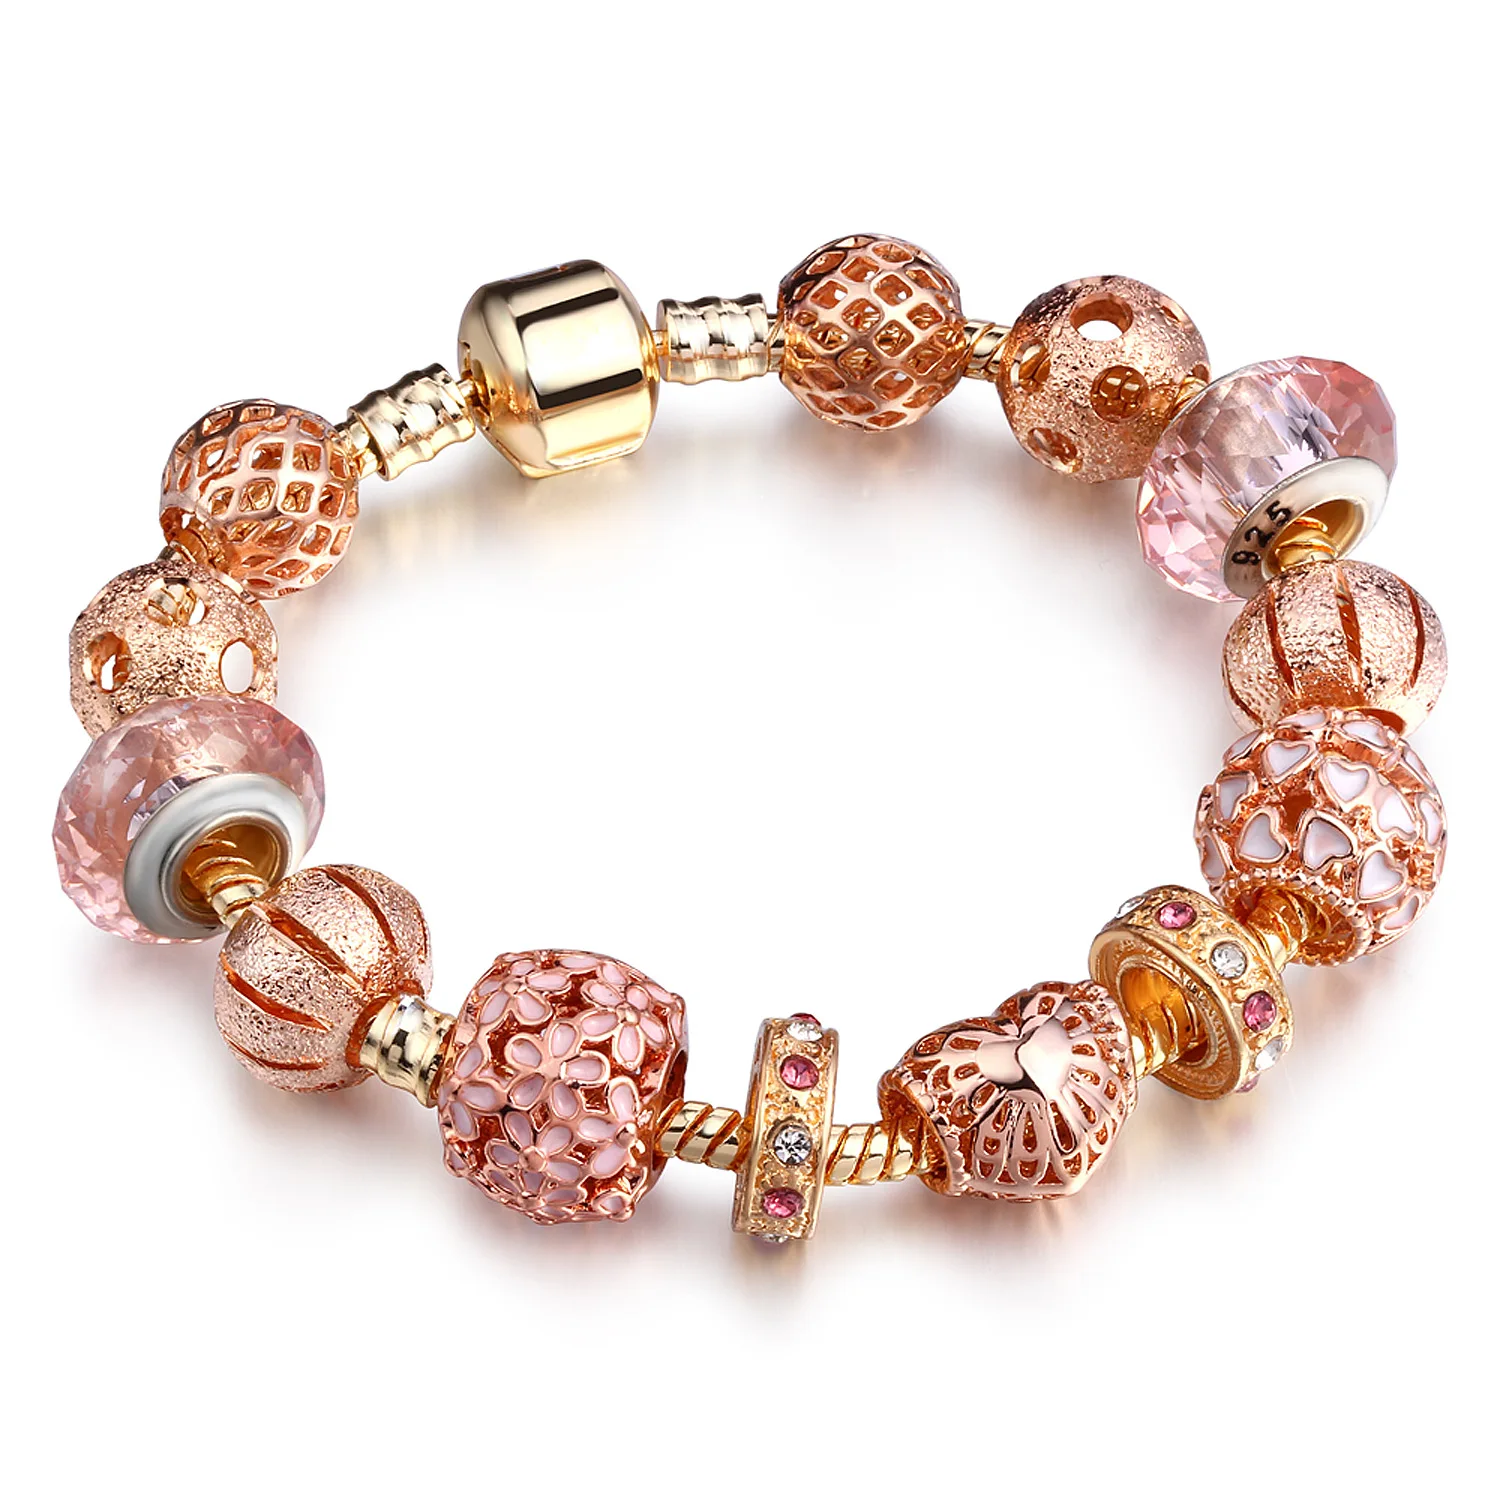 

18K Gold Chain Enamel Flower Heart Charm Bracelet Rose Gold DIY Pink Austrian Crystal Bead Fit Pan Charm Bracelet (KB8358), As picture